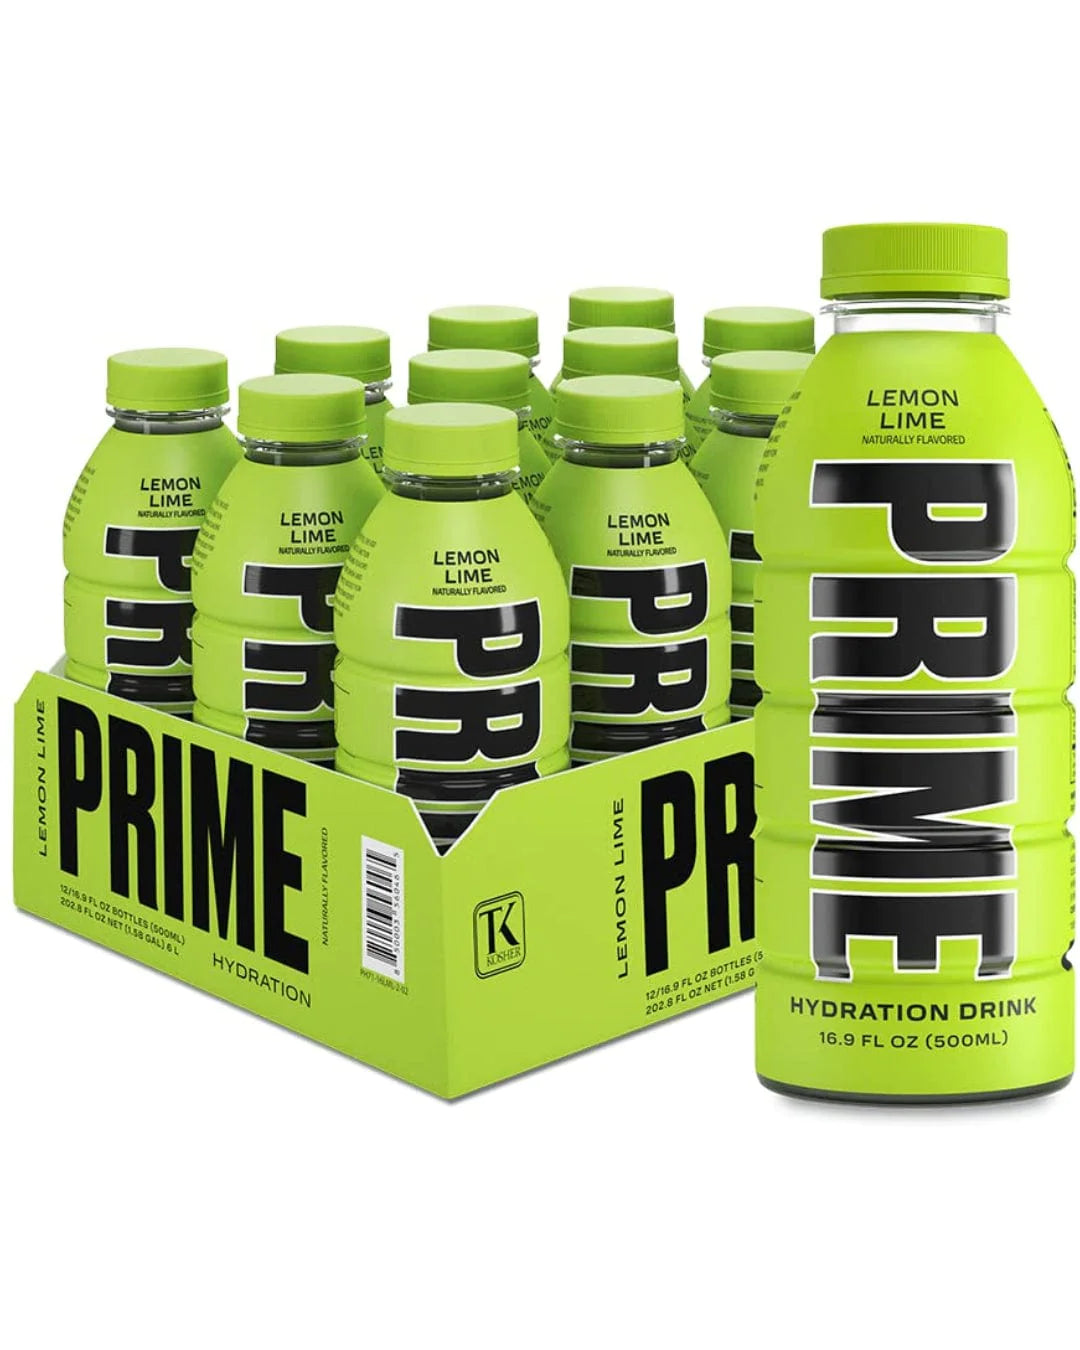 Prime Hydration Drink Lemon Lime - 500ml - Case of 12 - Greens Essentials